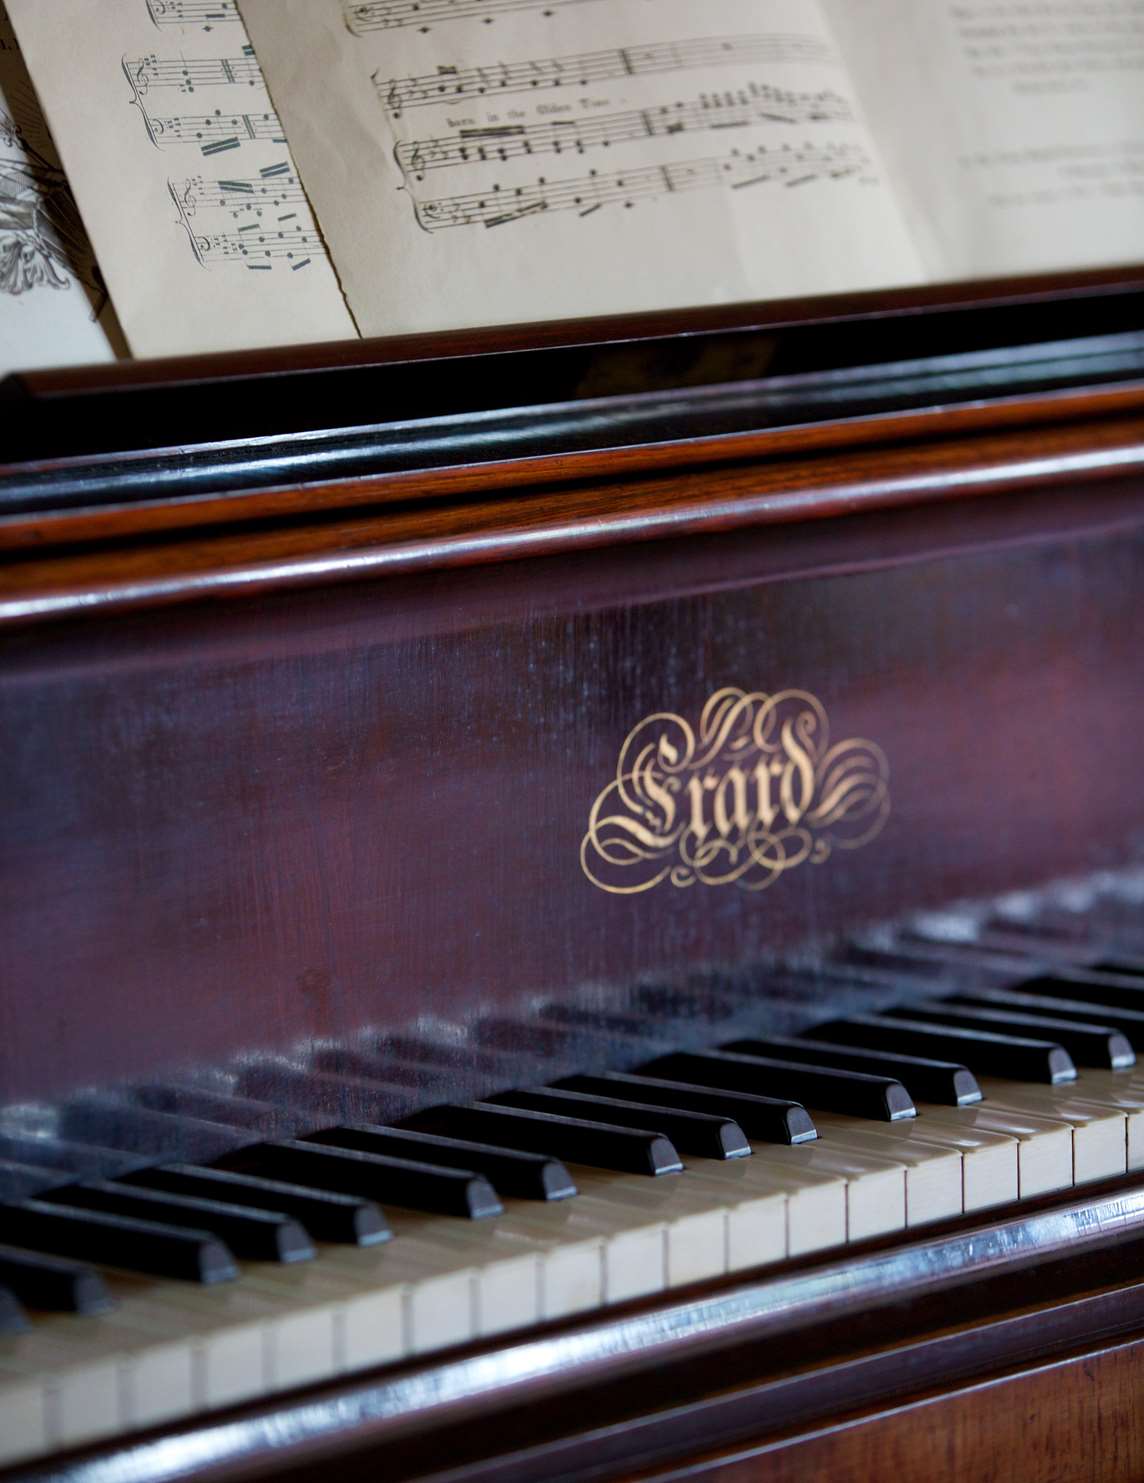 Image: Piano keys and music